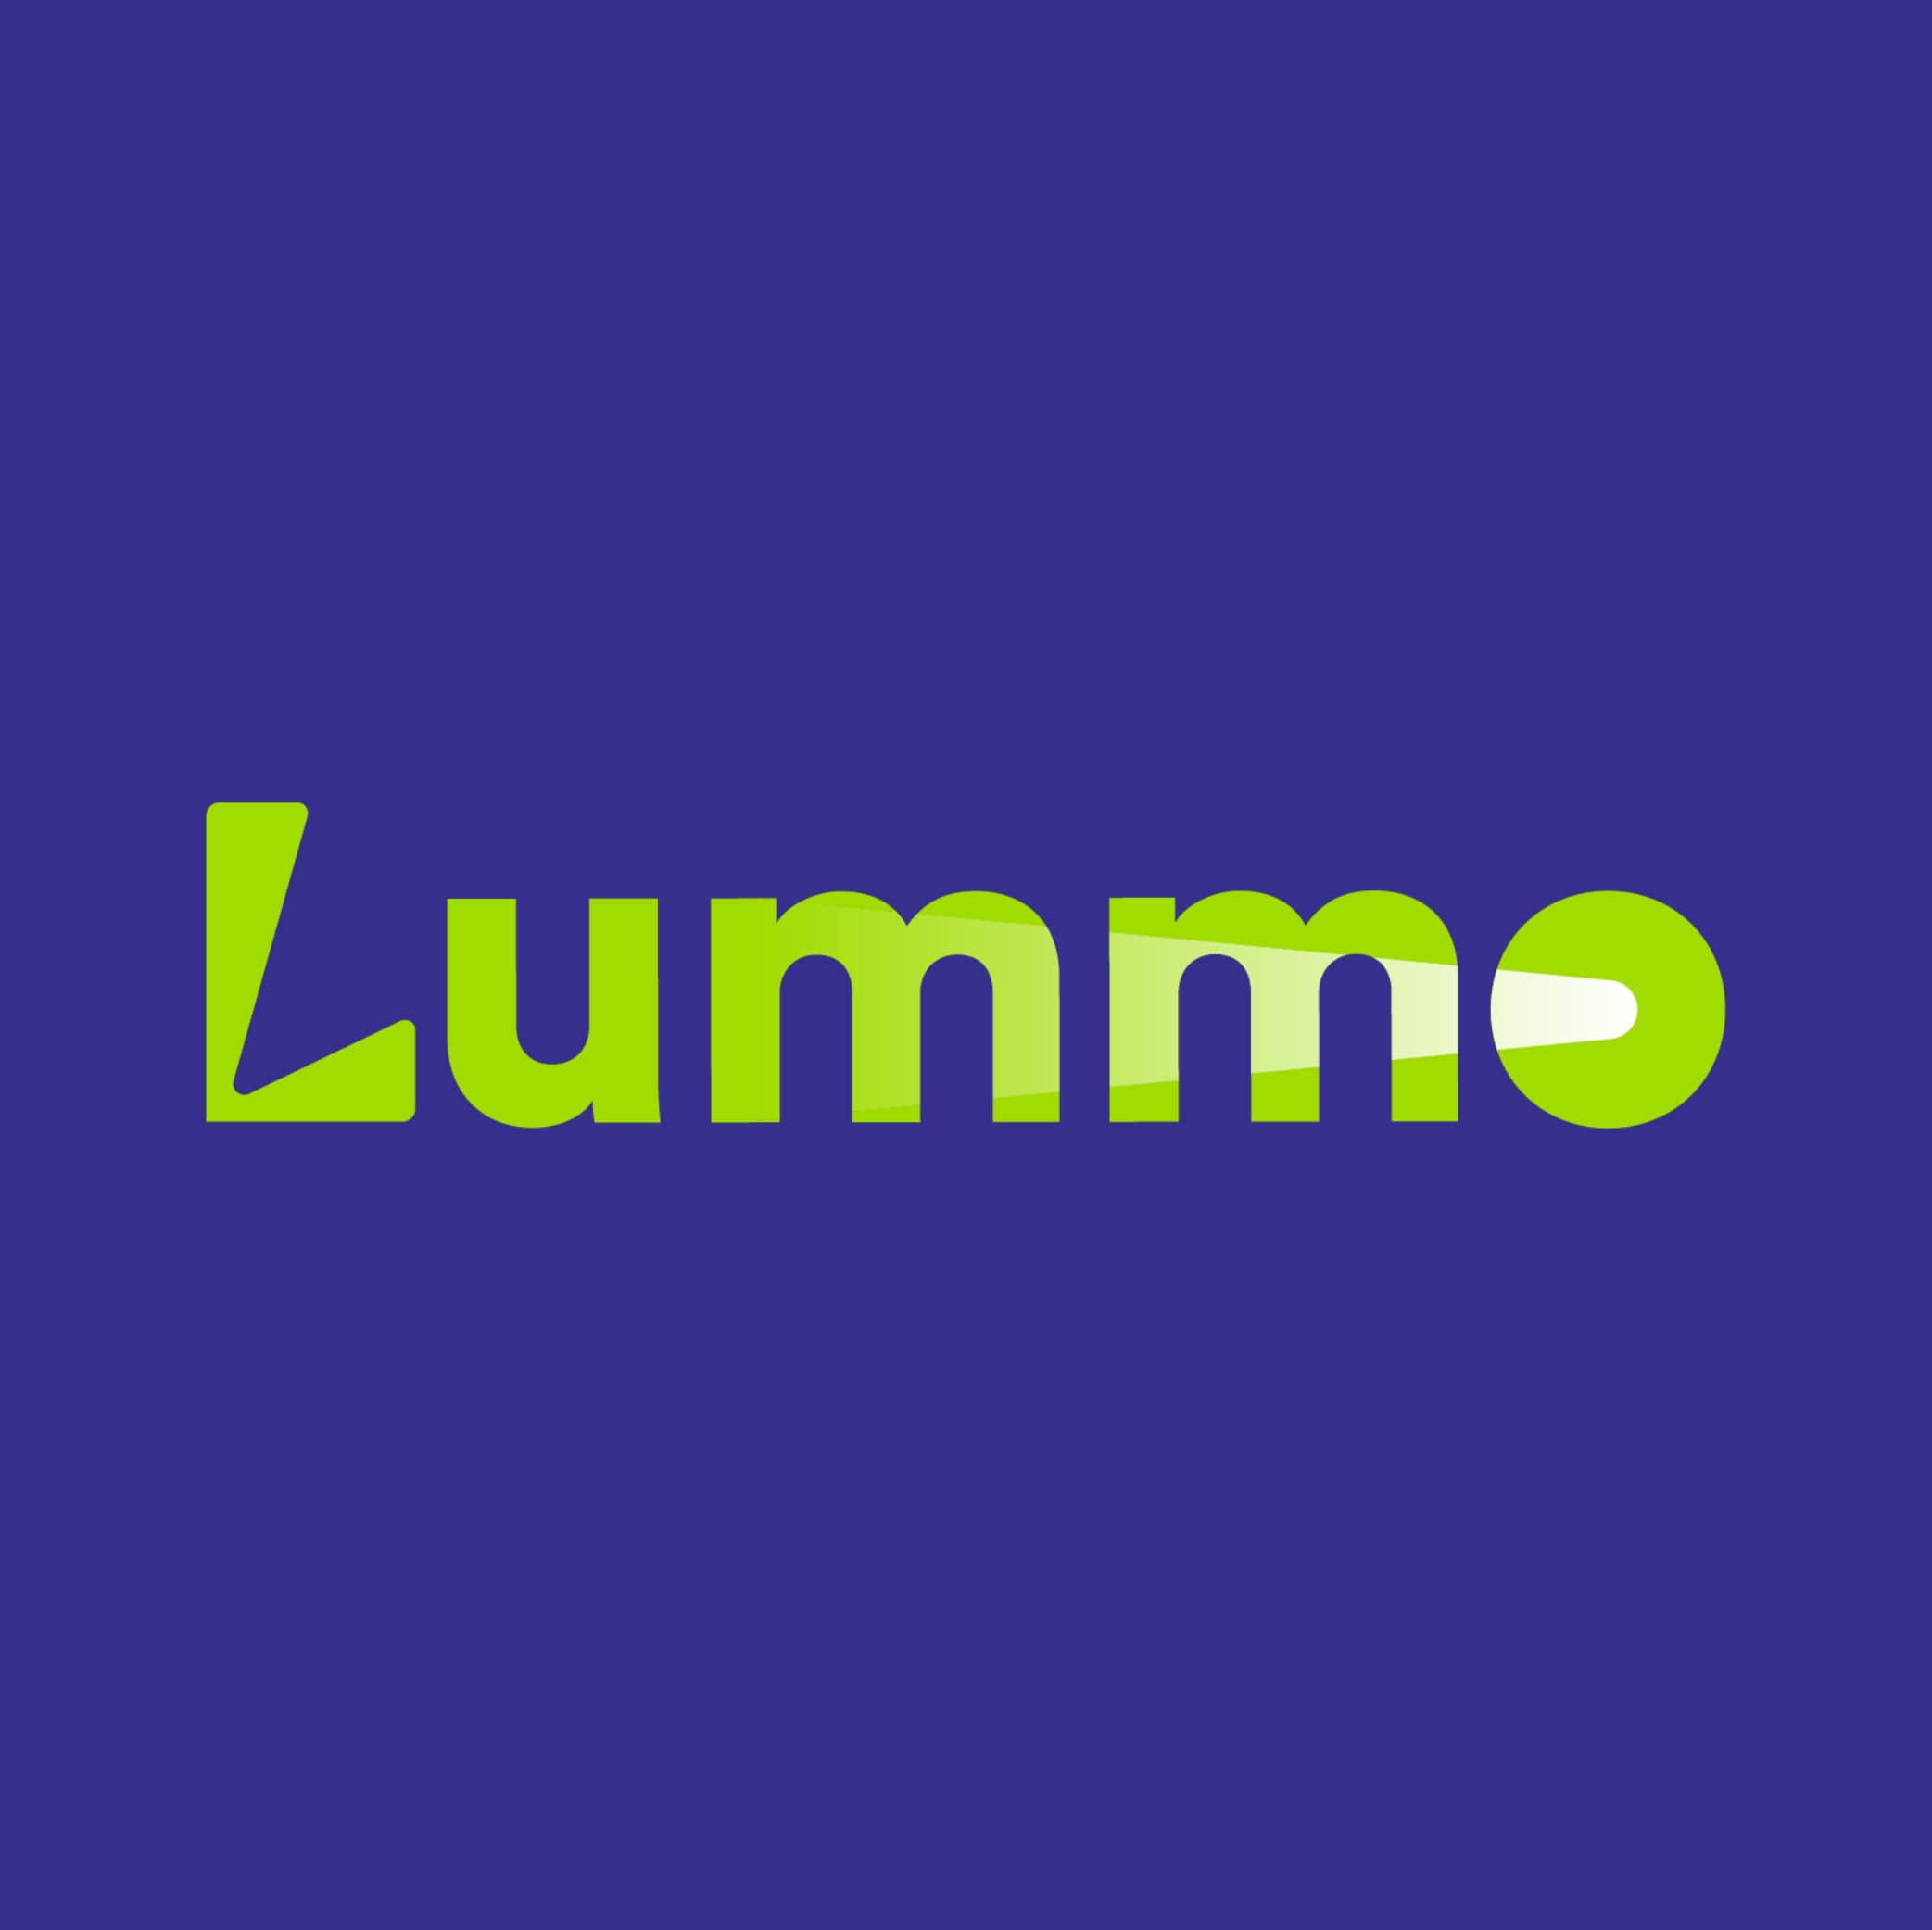 Lummo's logo